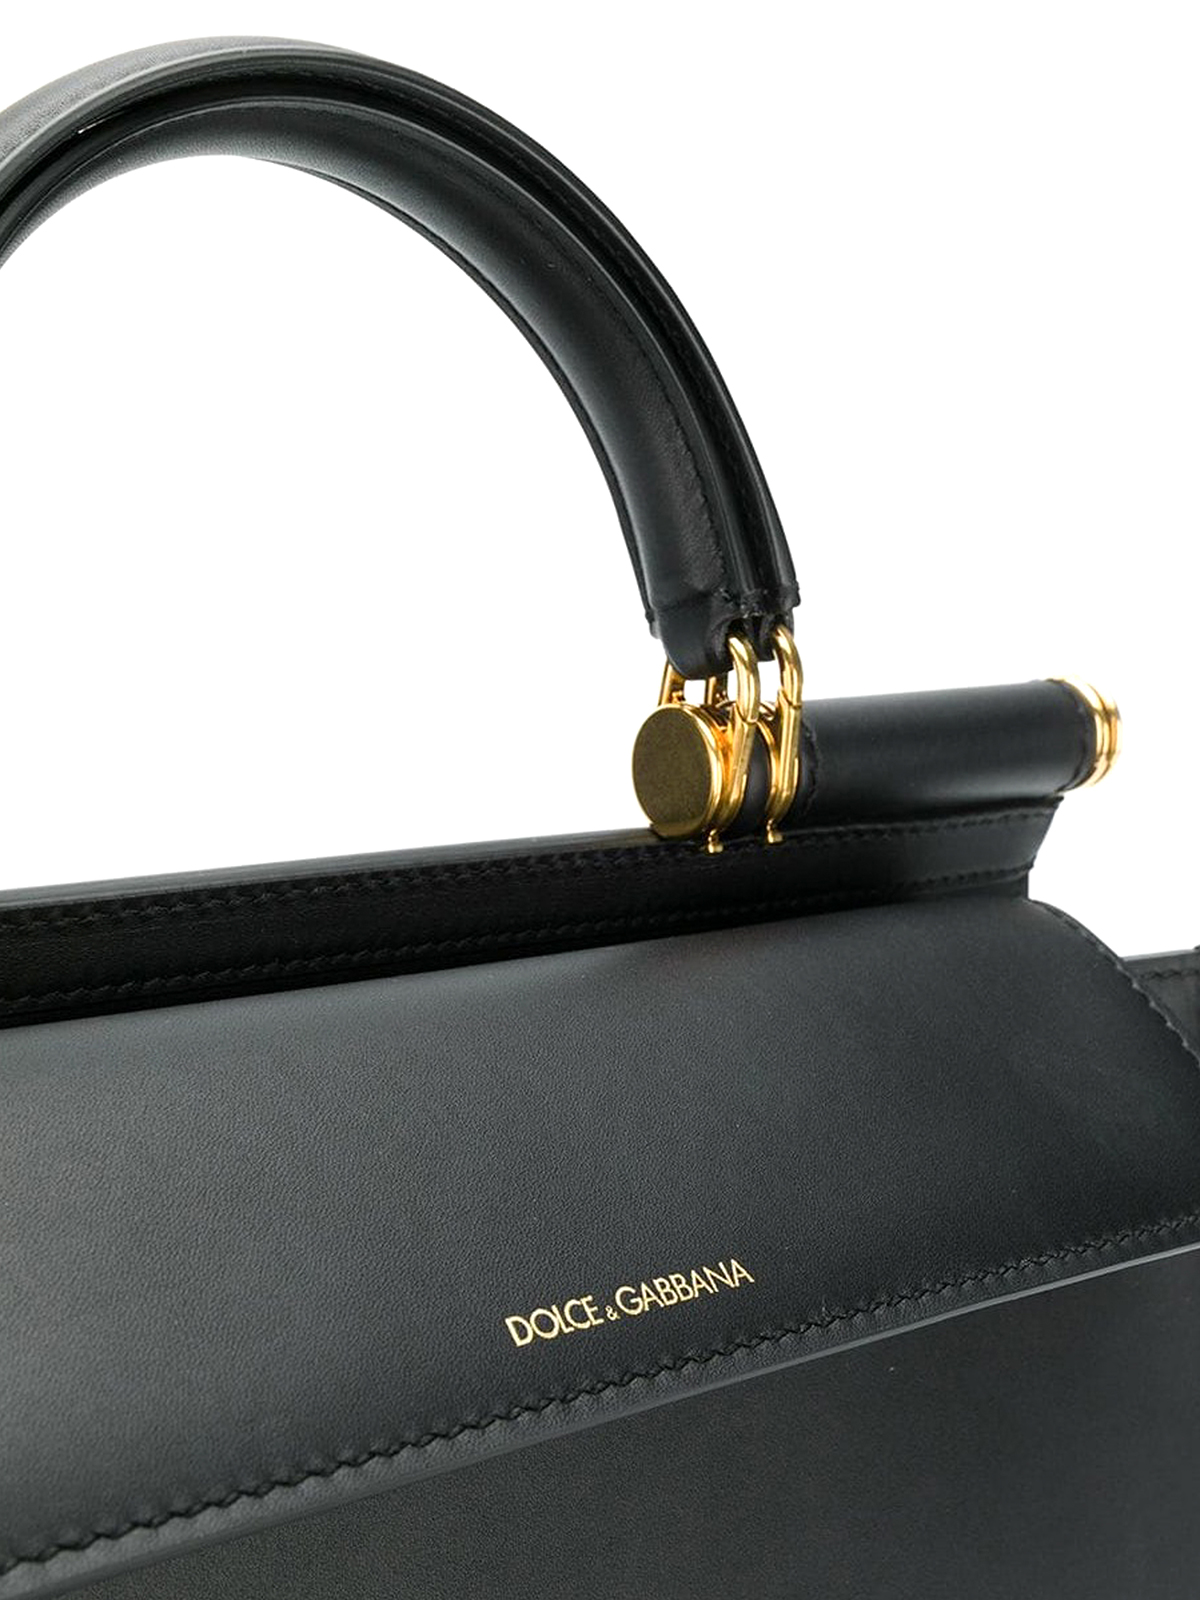 Sicily large shiny leather handbag by Dolce & Gabbana